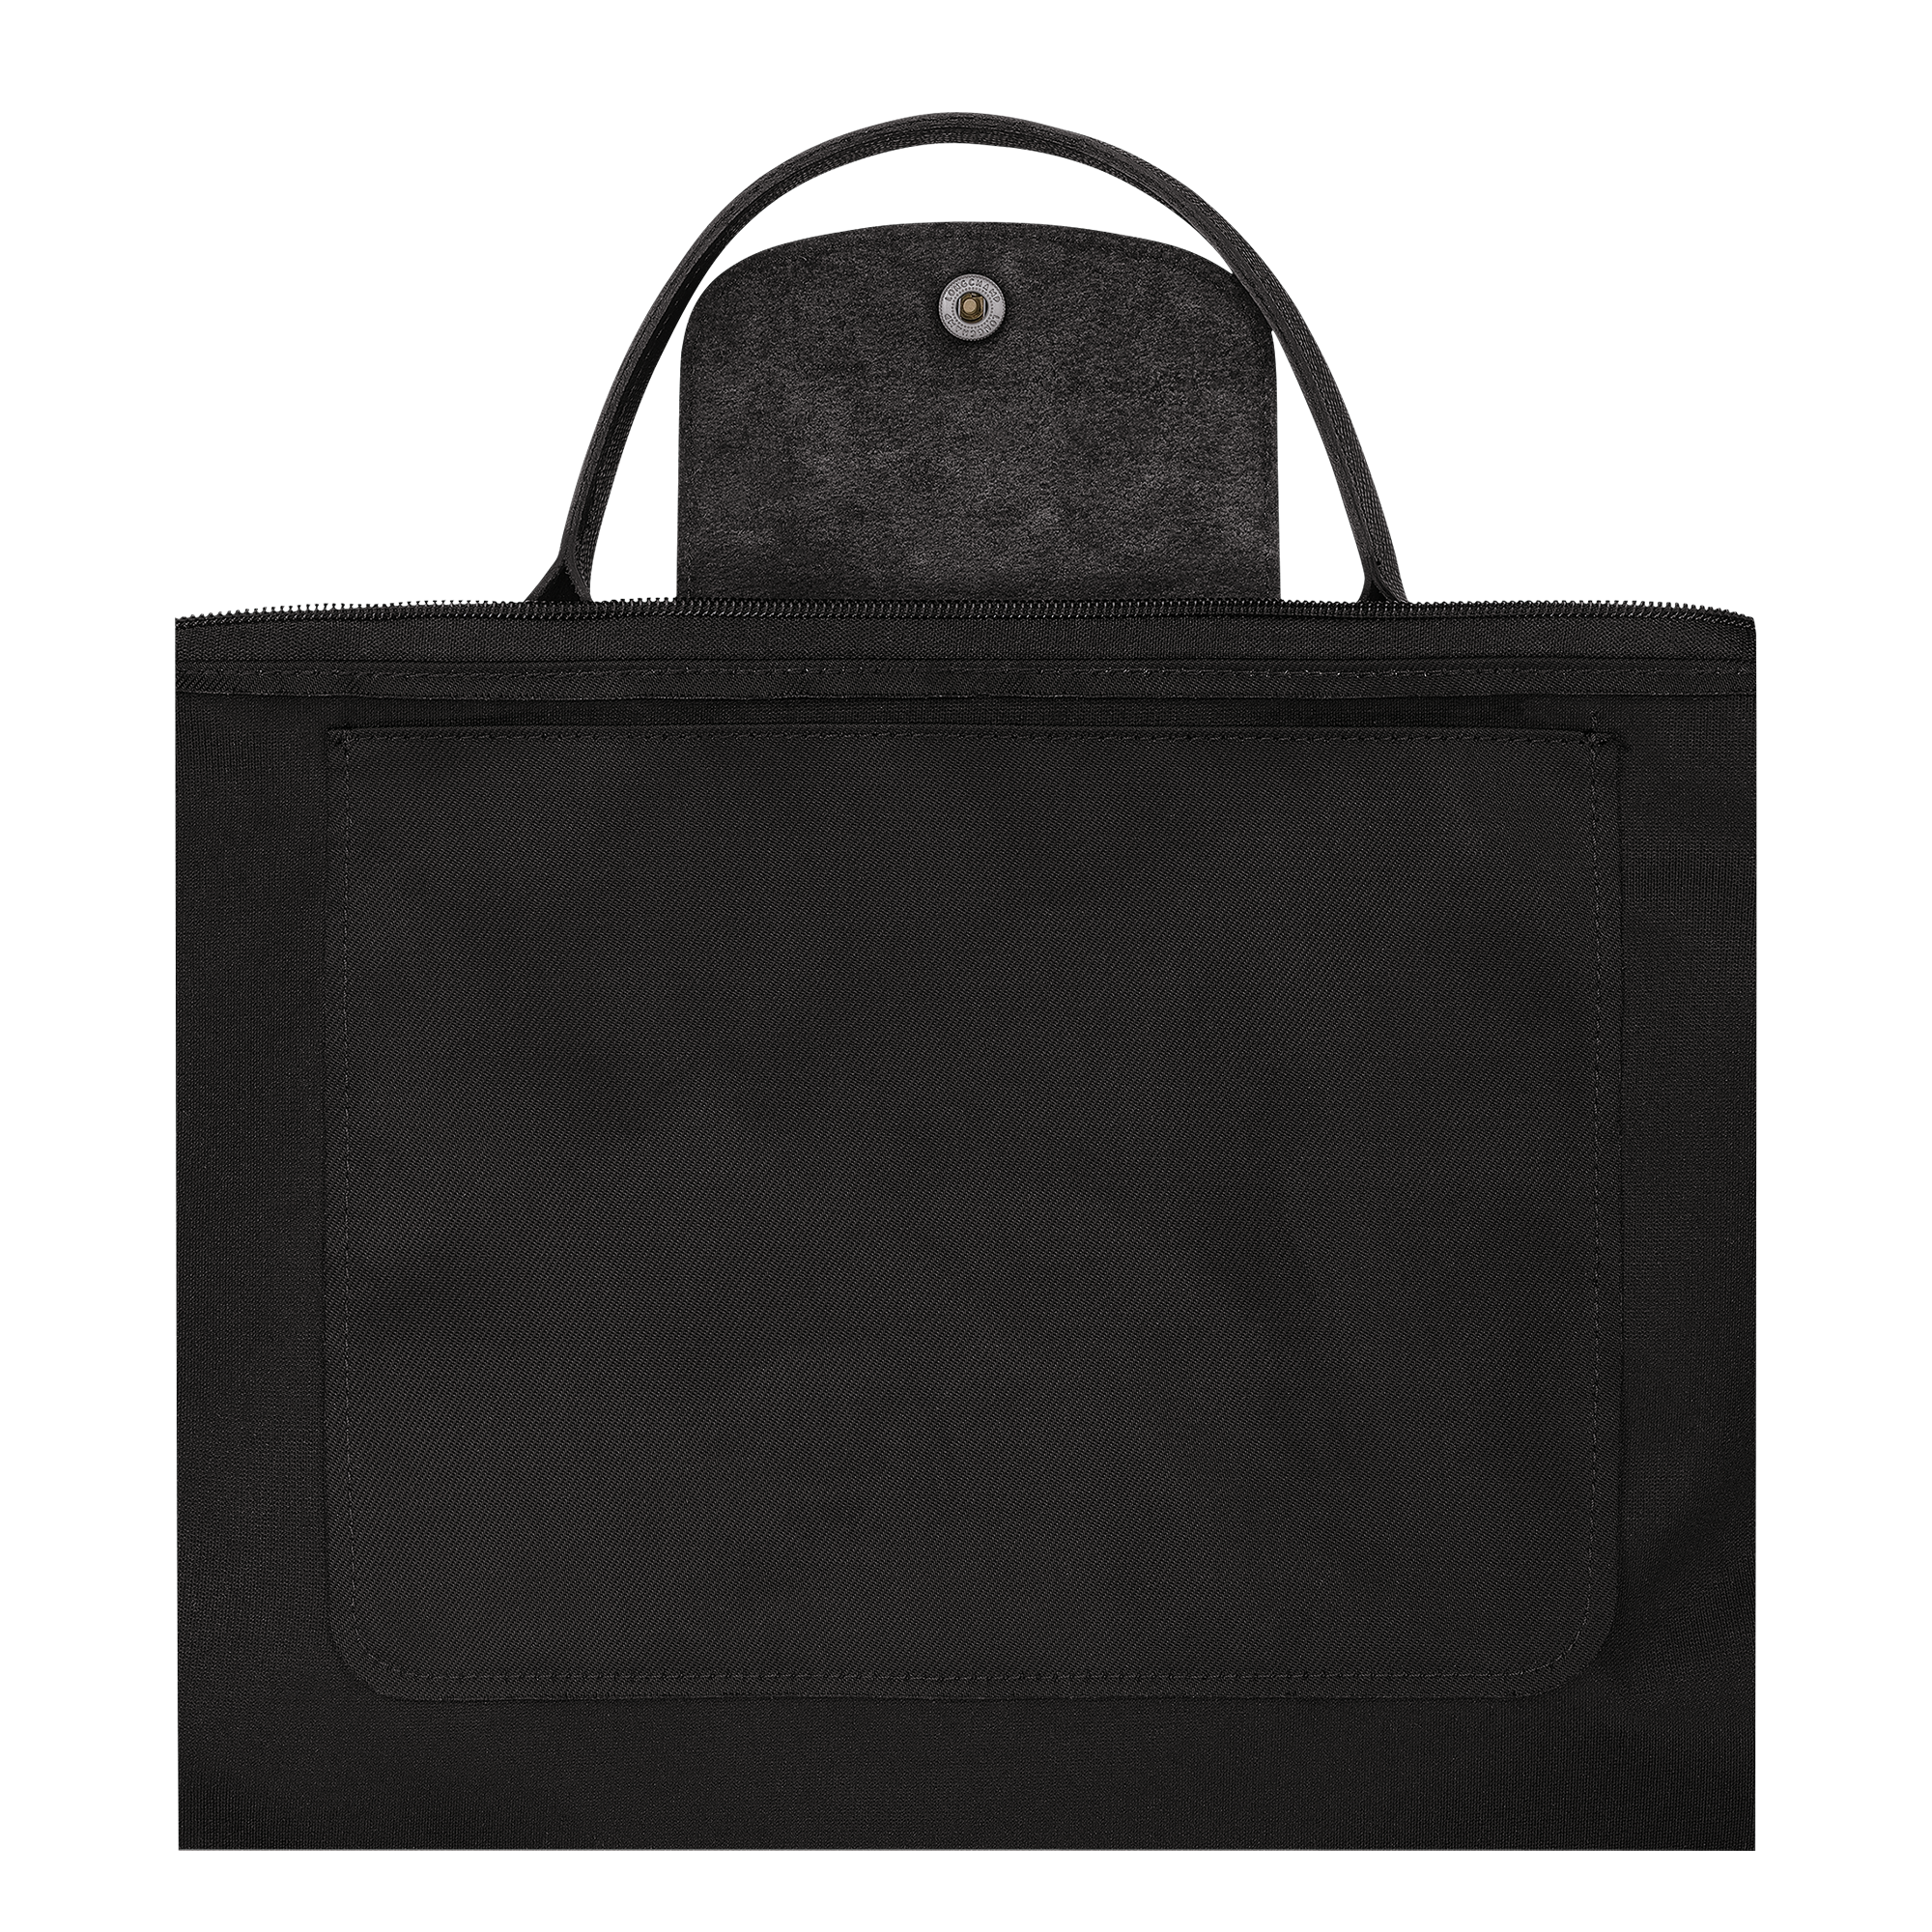 Longchamp Le Pliage Energy Medium Shoulder Bag Black